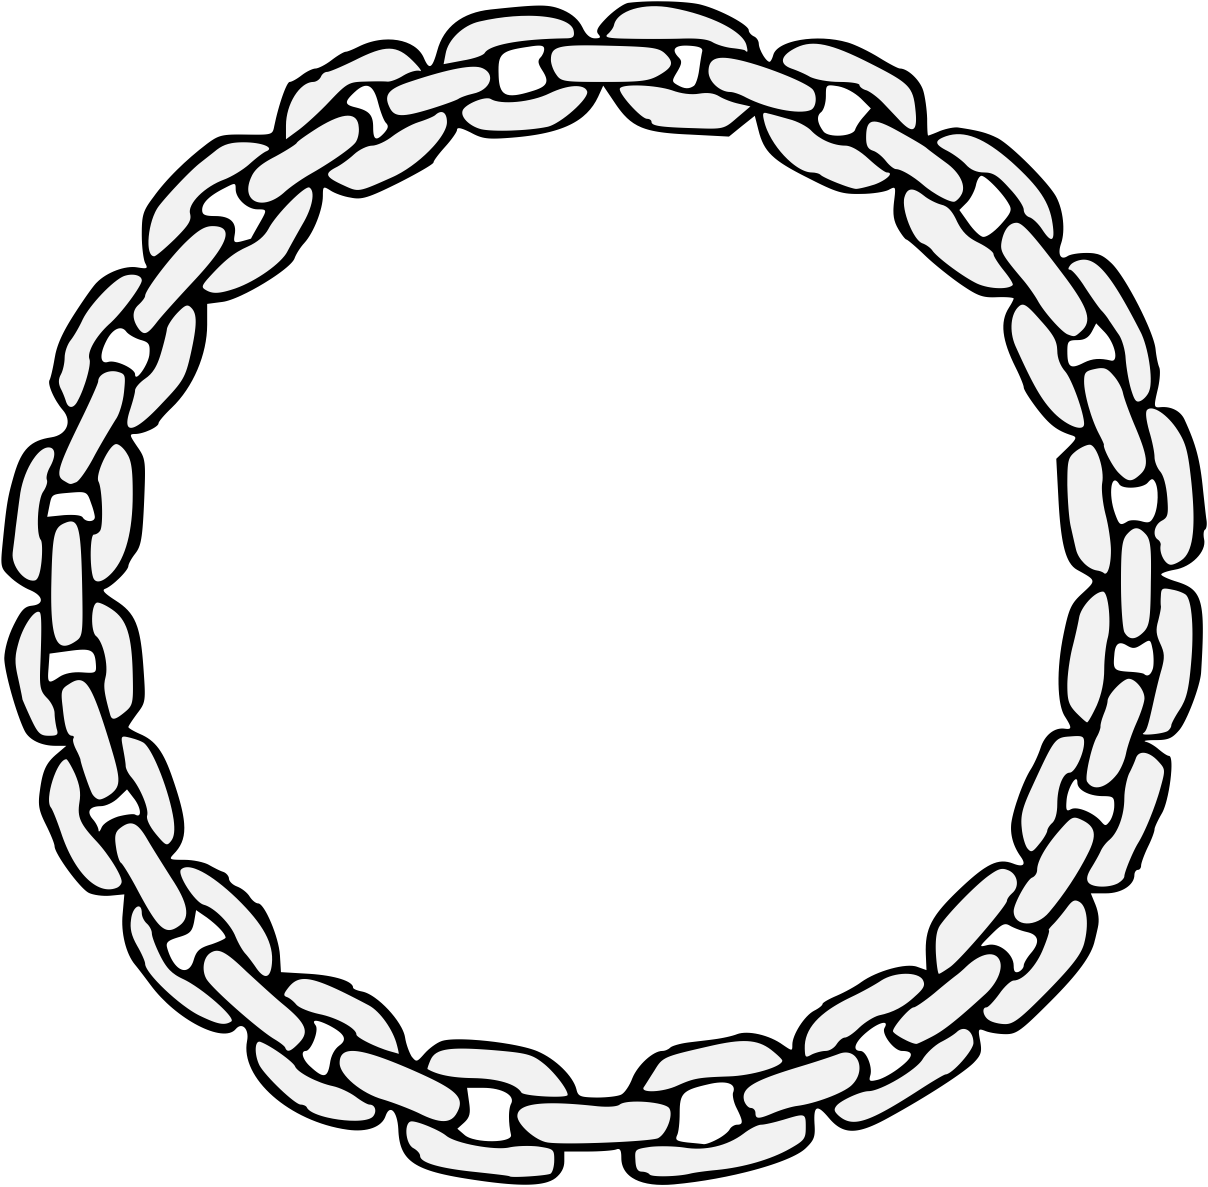 Pdf - Circle Of Chains Png (1208x1187)